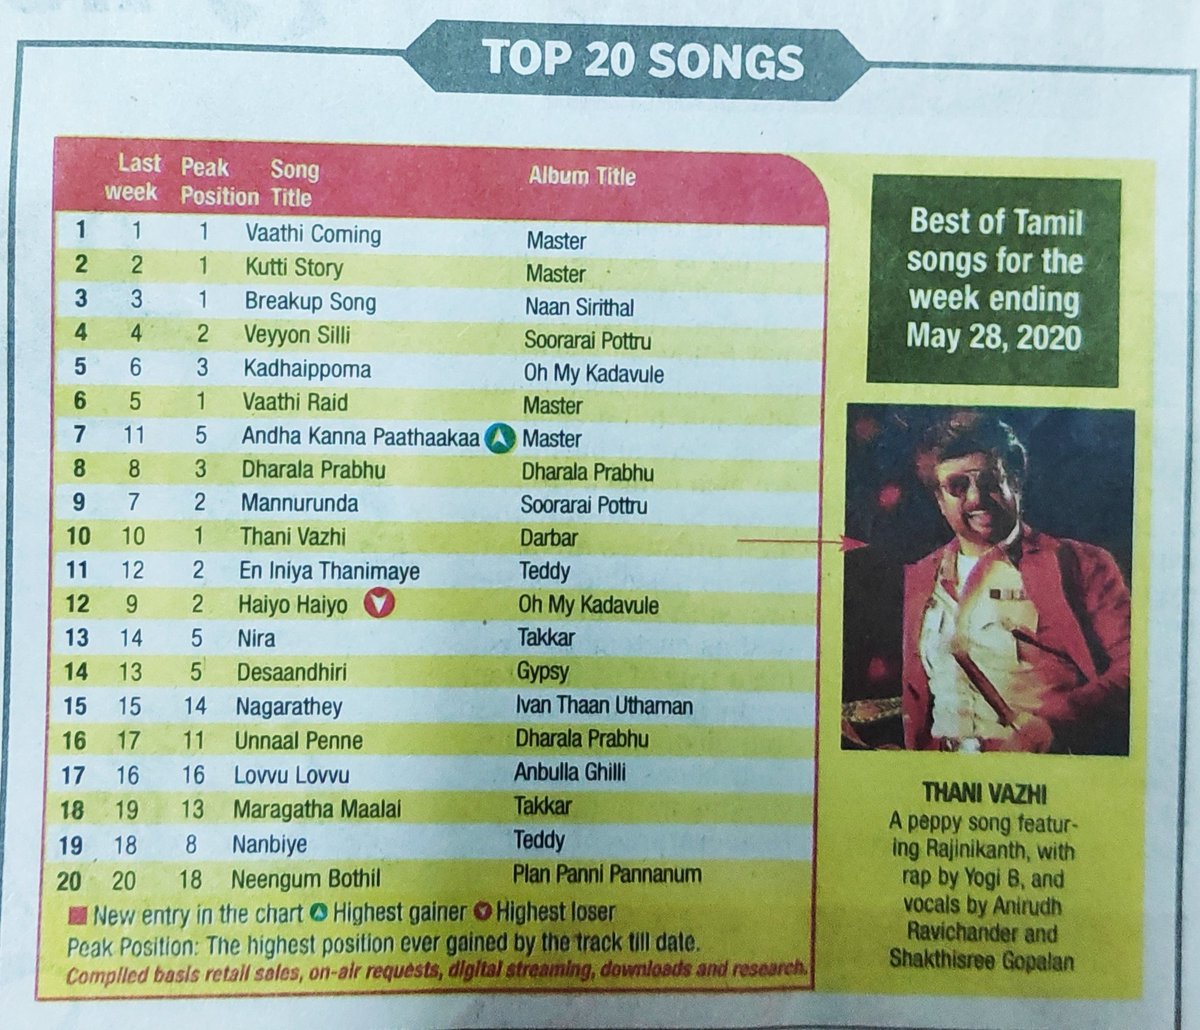 #VaathiComing #kuttistory from #Thalapathy #Vijay's #Master tops the Mirchi top 20 charts of the week, followed by songs from #NaanSirithal #SooraraiPottru #OhMyKadavule #DharalaPrabhu #Darbar #Teddy #Takkar #Gypsy #IvanThaanUthaman #AnbullaGhilli #PlanPanniPannanum.